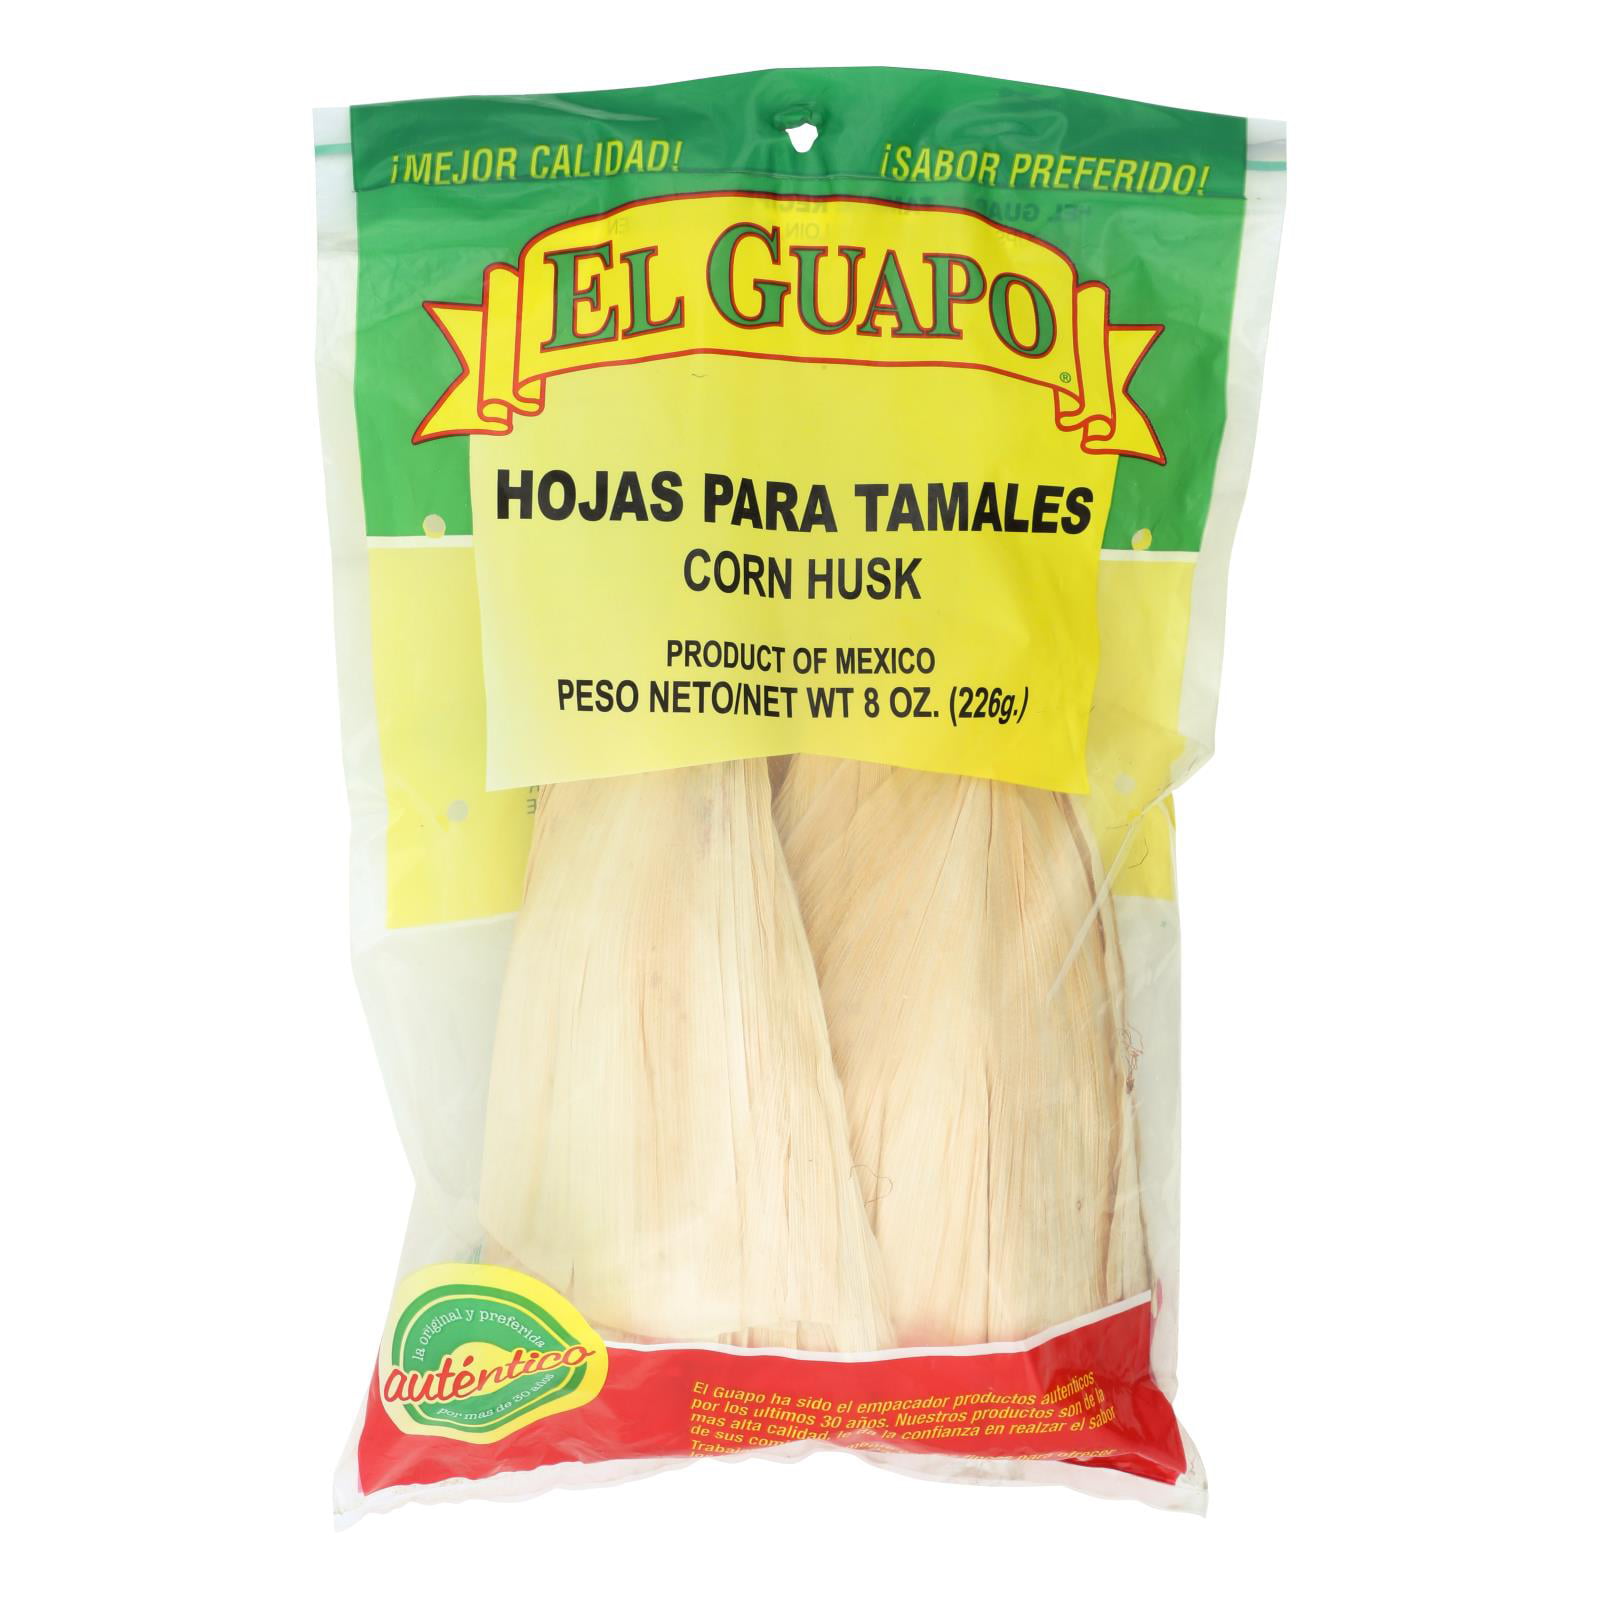 El Guapo Shelled Corn Husks, 16 oz - Ralphs